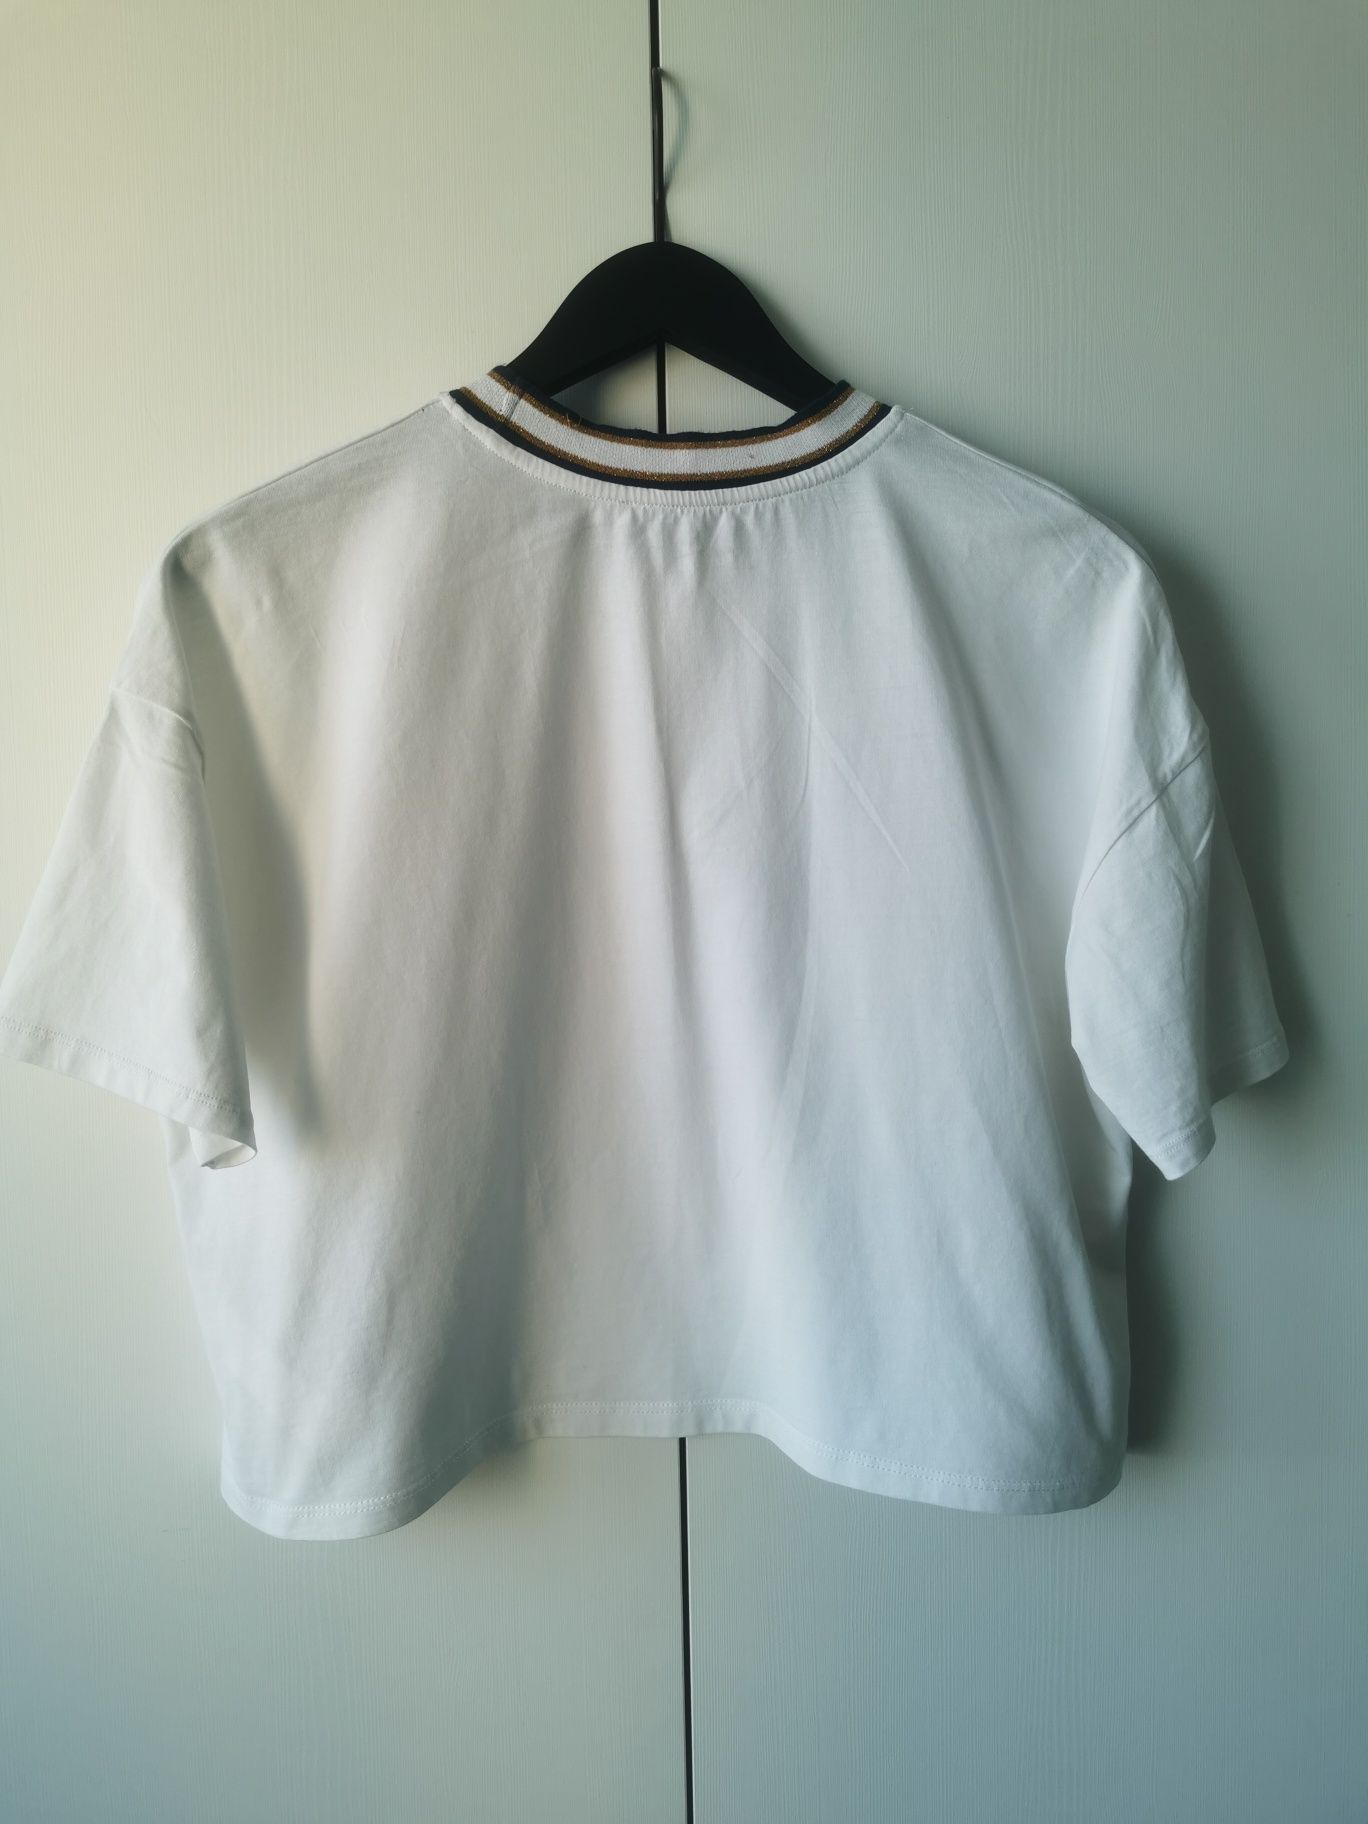 Zara bluzka t-shirt koszulka 36 S biała crop top bawełna oversize